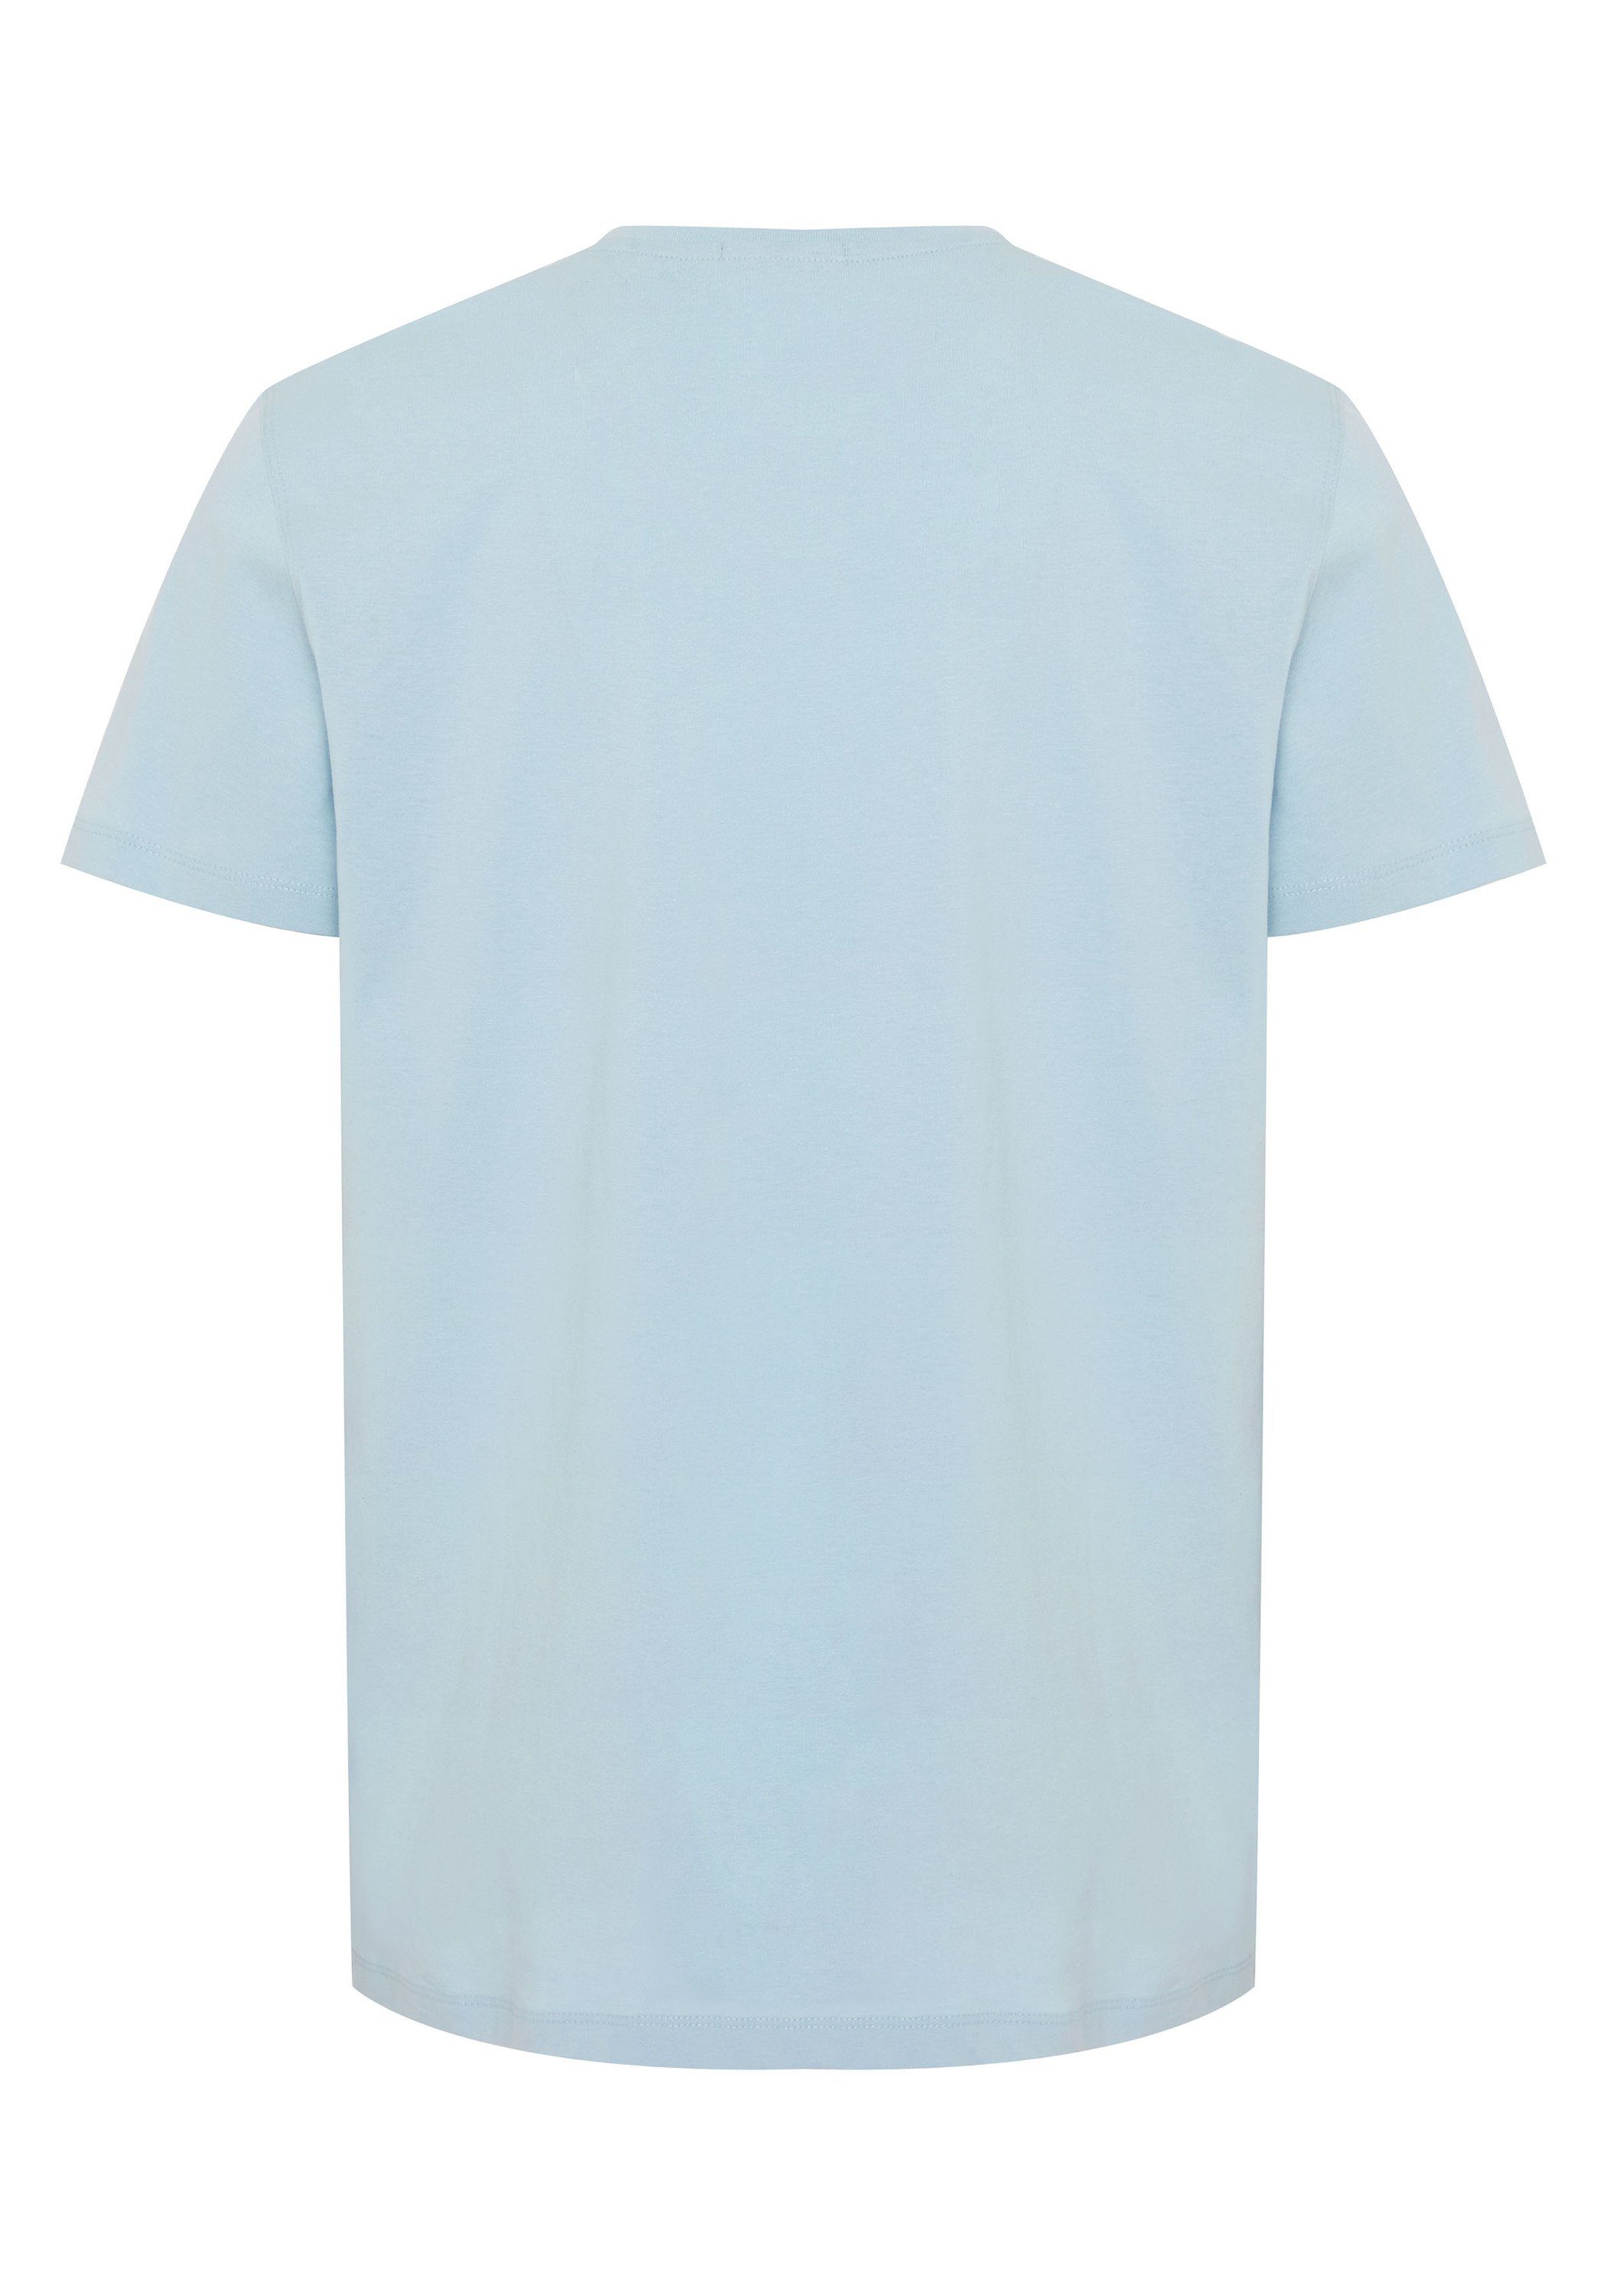 Multicolour-Logo Print-Shirt Sky Blue Chiemsee mit T-Shirt